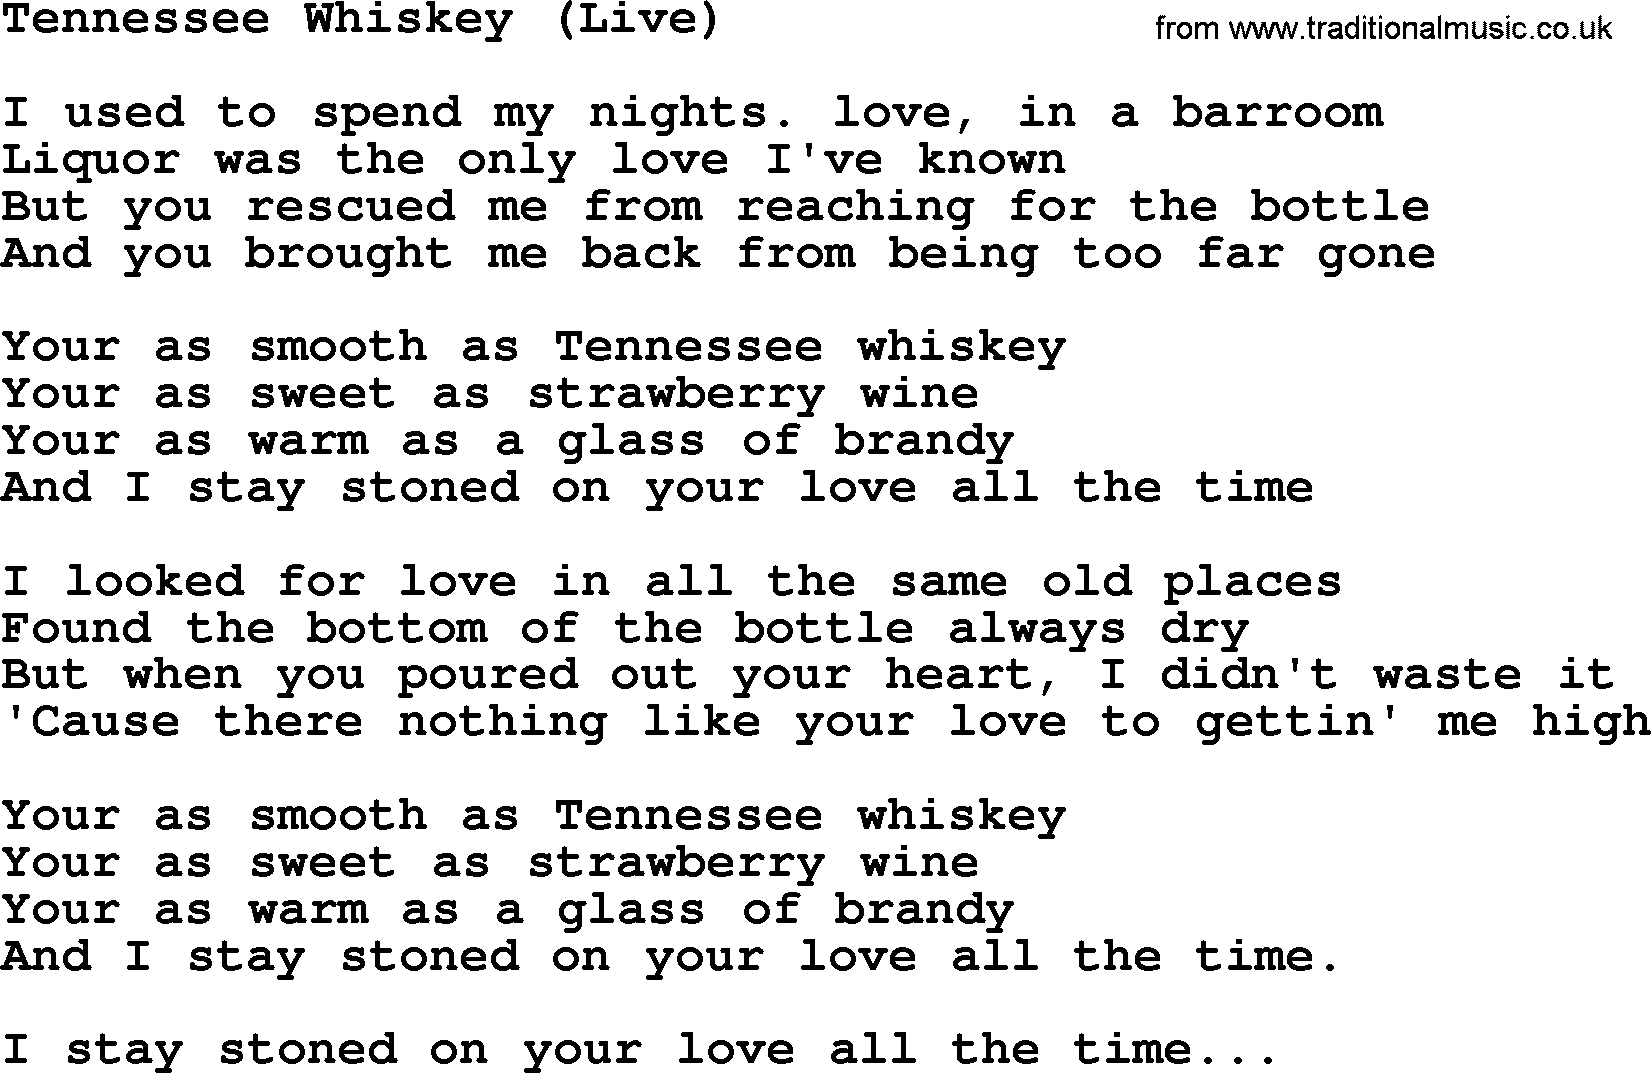 George Jones song: Tennessee Whiskey (live), lyrics